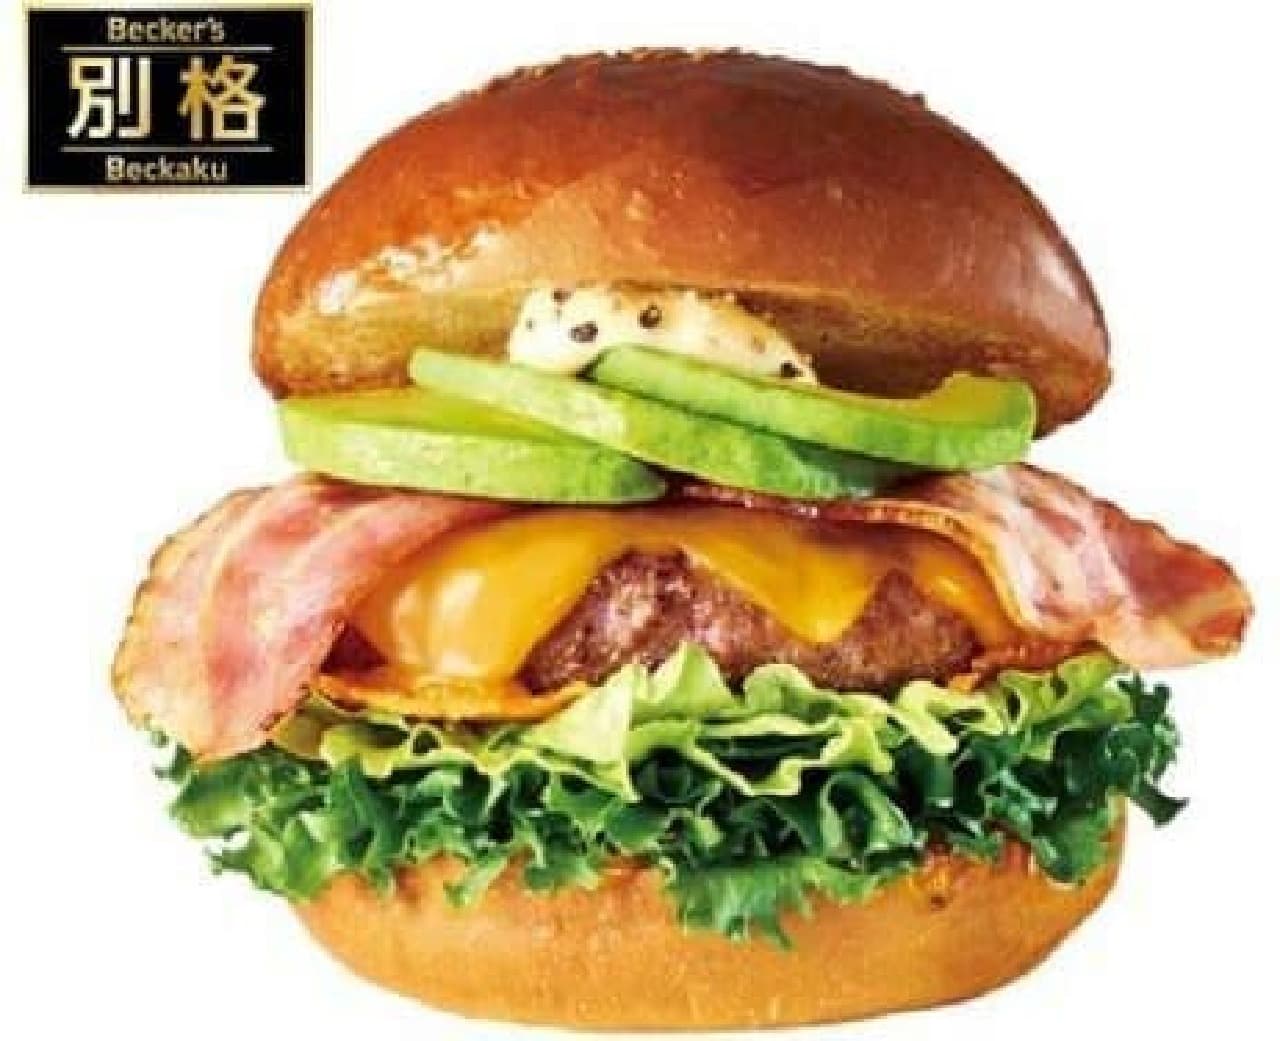 "The ABC Burger"